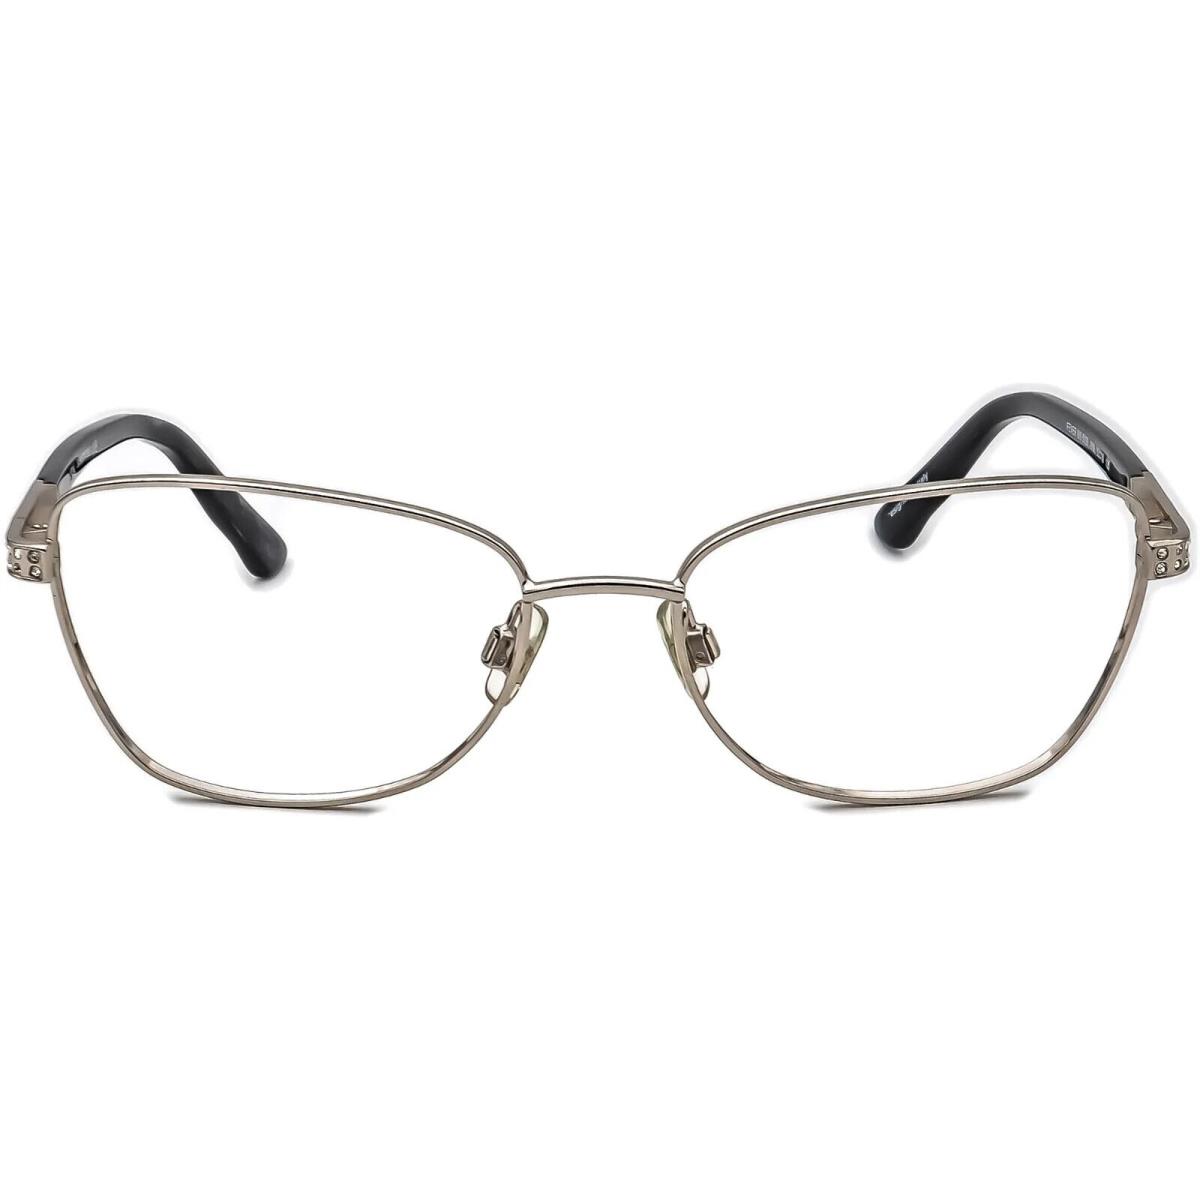 Swarovski Fever SW 5150 016 Silver Metal Butterfly Style Eyeglasses 53-16-135